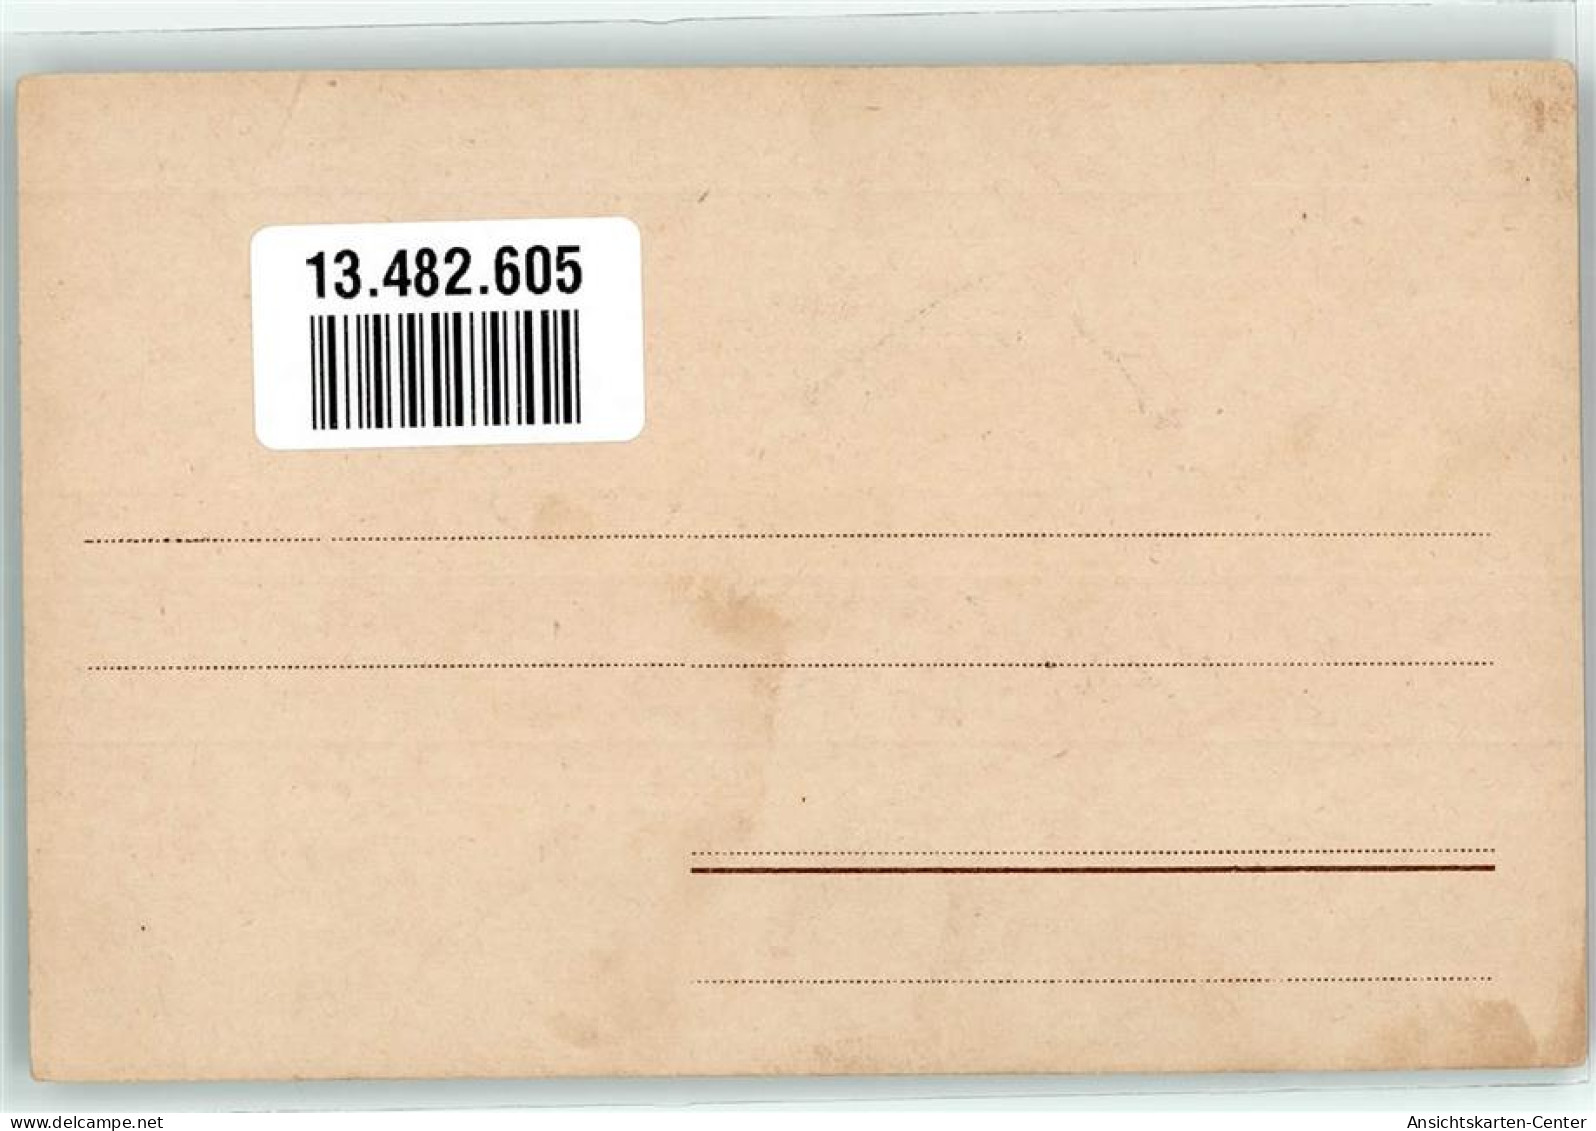 13482605 - Faecher Frau - Postal Services